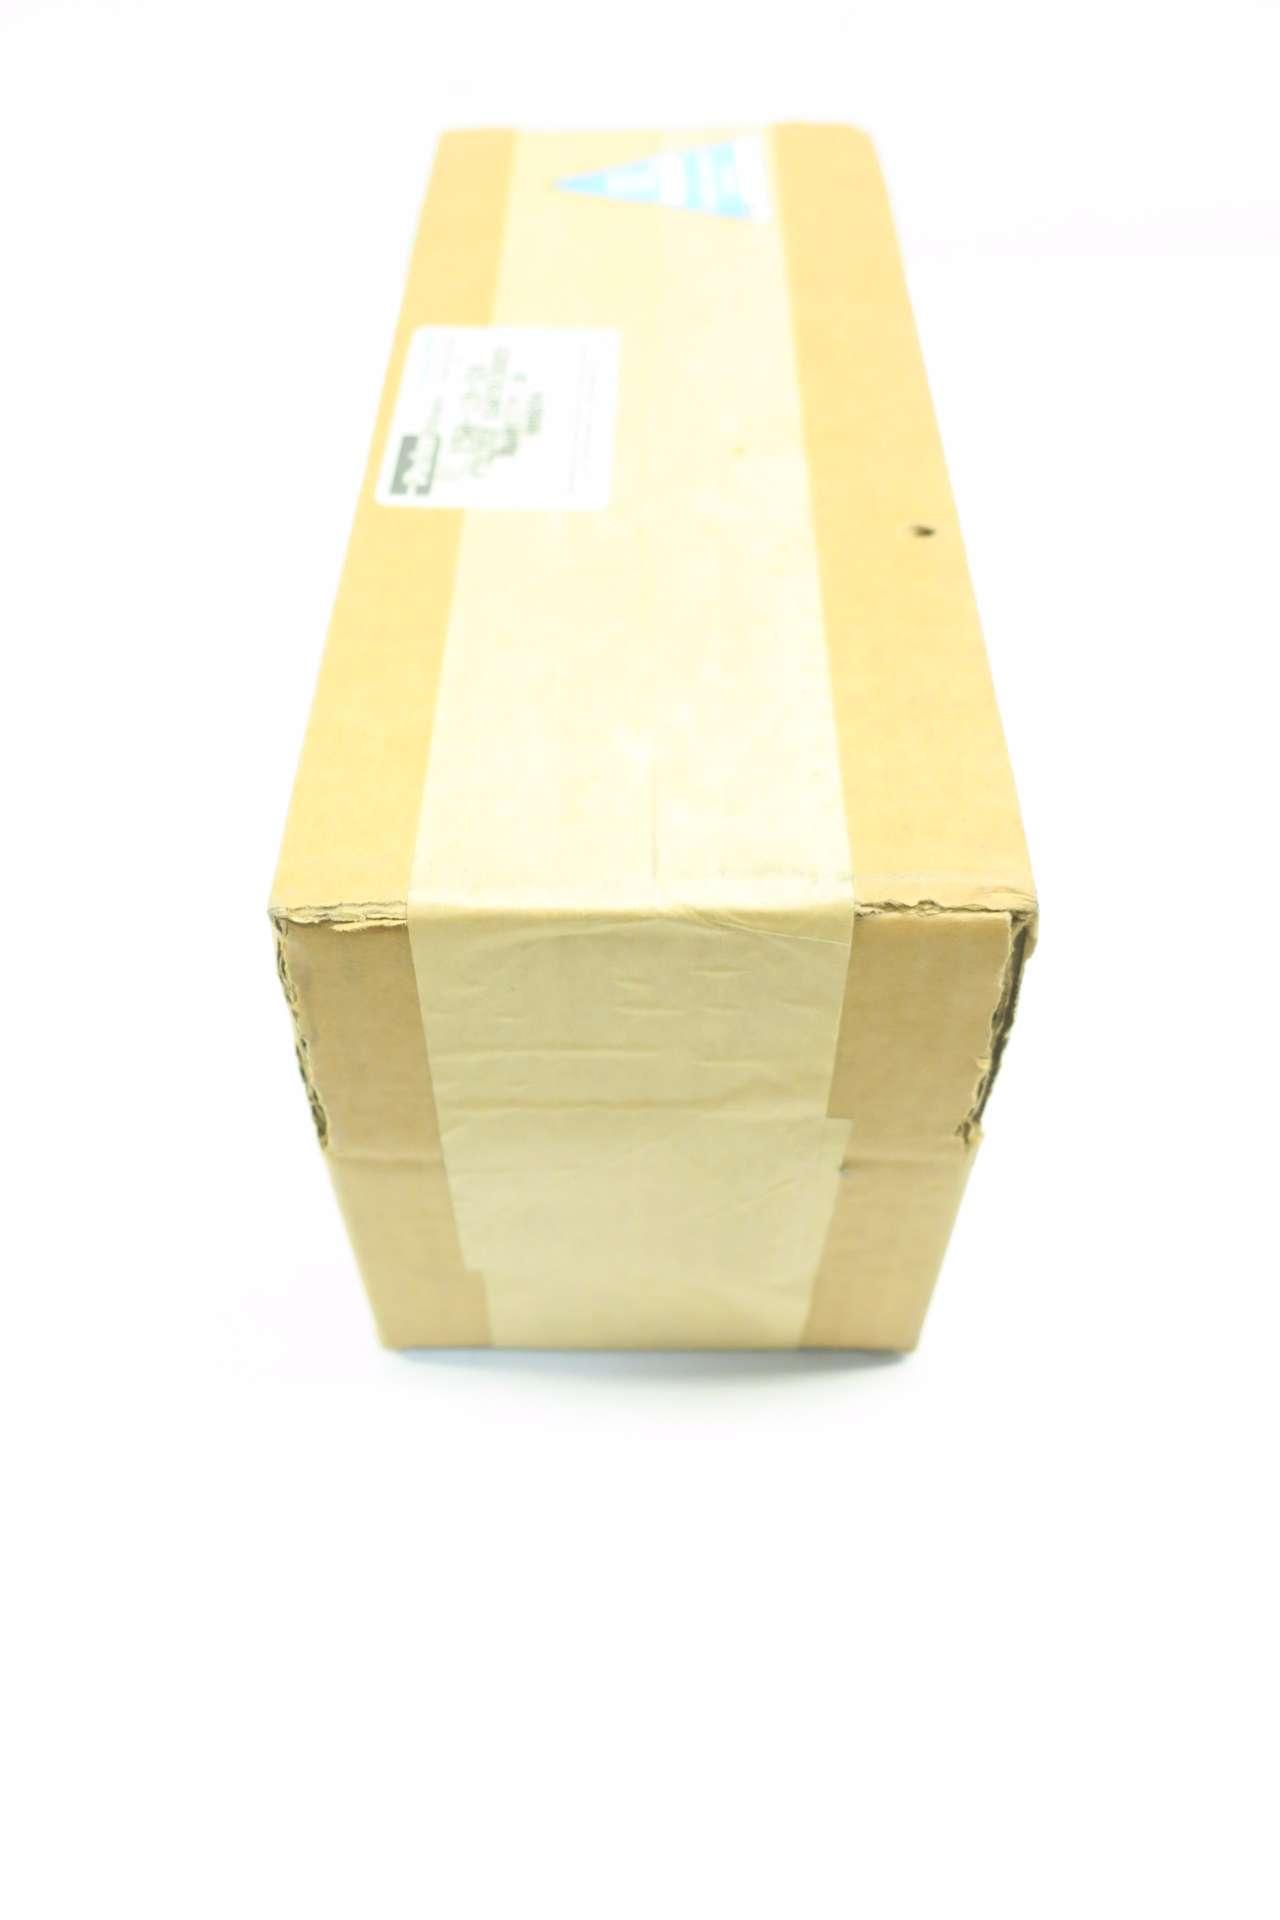 Box Of 10 New Parker 150-19-SA Balston Pneumatic Filter Element 